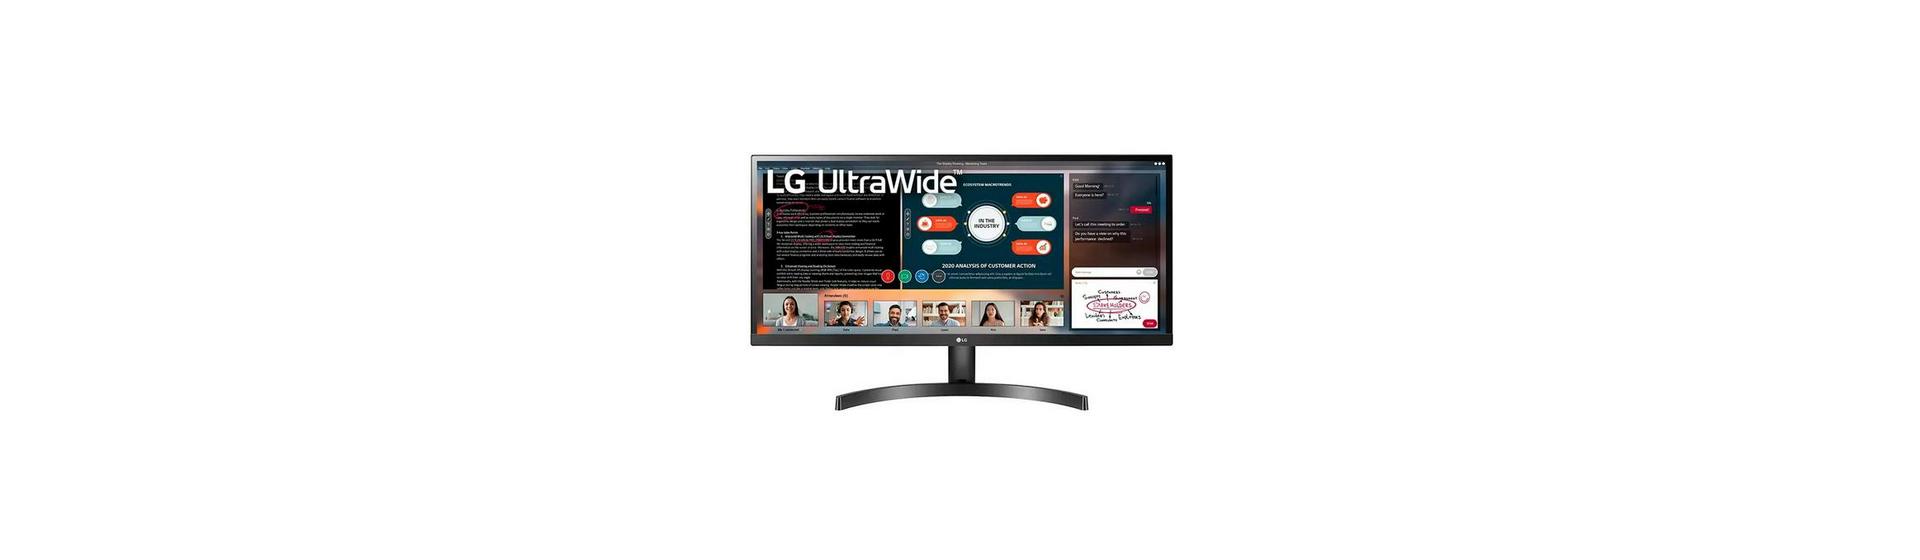 Promoção: Monitor LED IPS 29" LG Full HD 29WL500 na KaBuM!